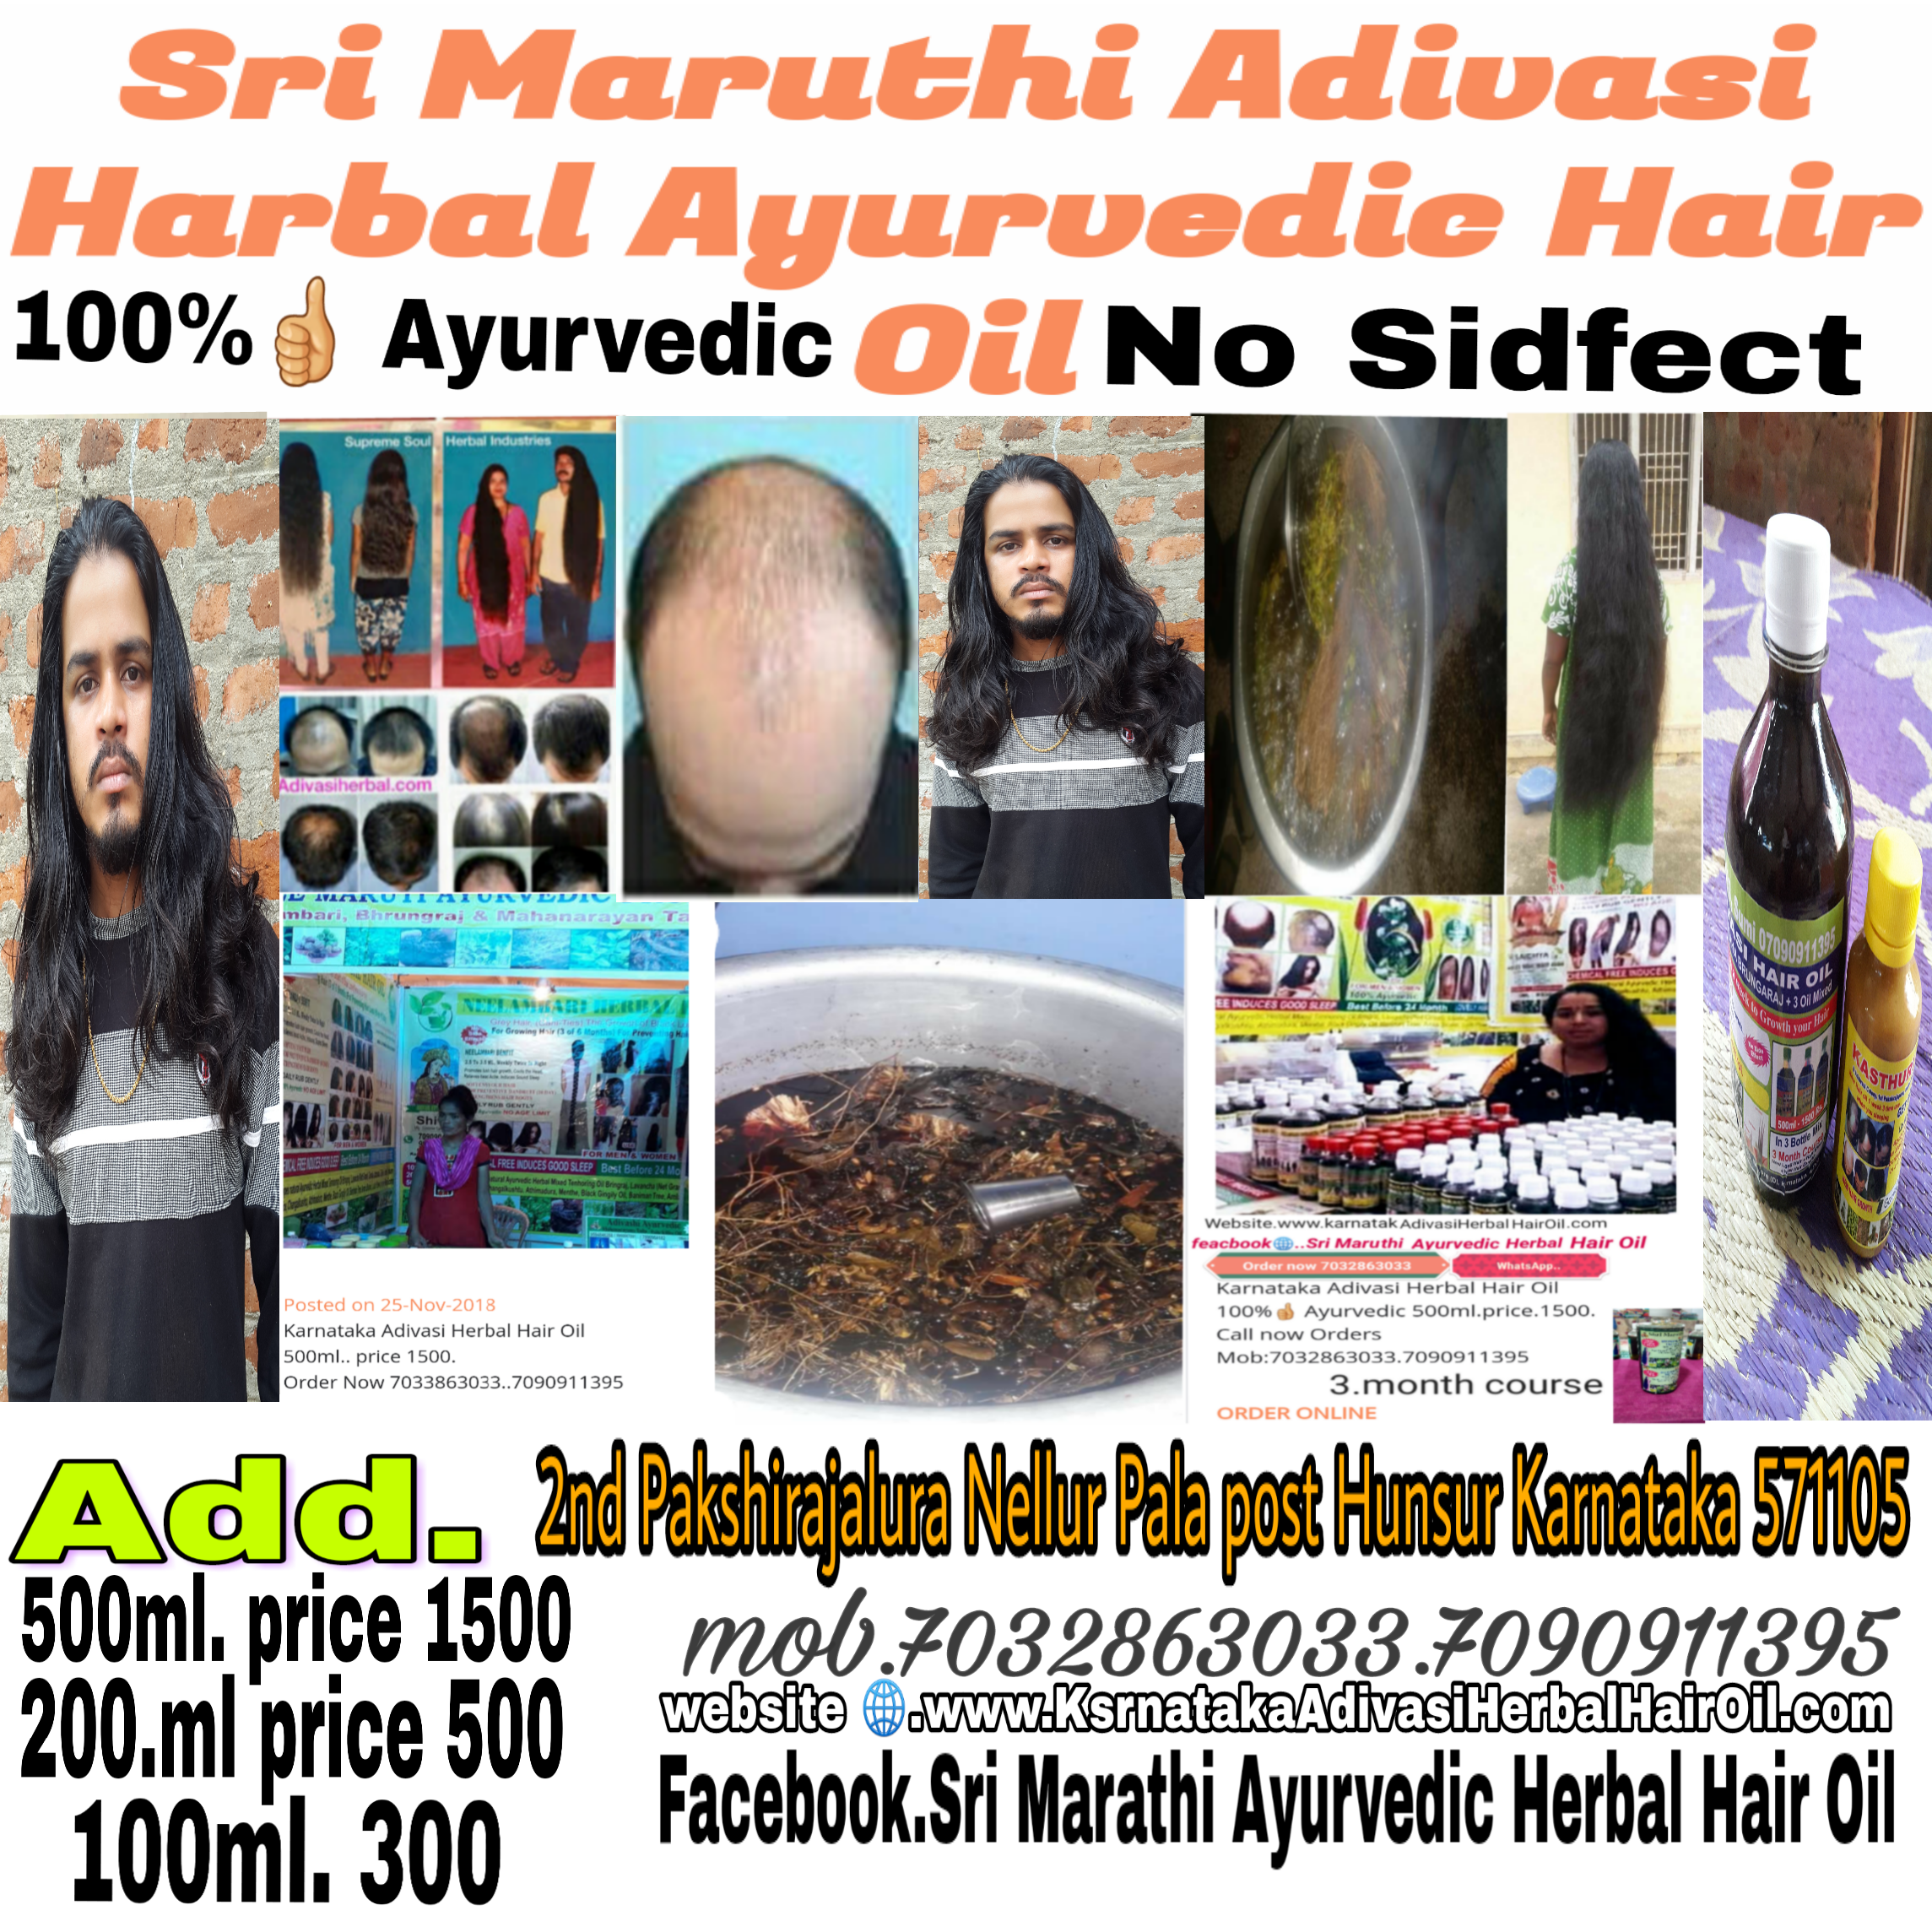 Karnataka Adivasi Herbal Hair Oil in Hyrige, Mysore-571189 | Sulekha Mysore